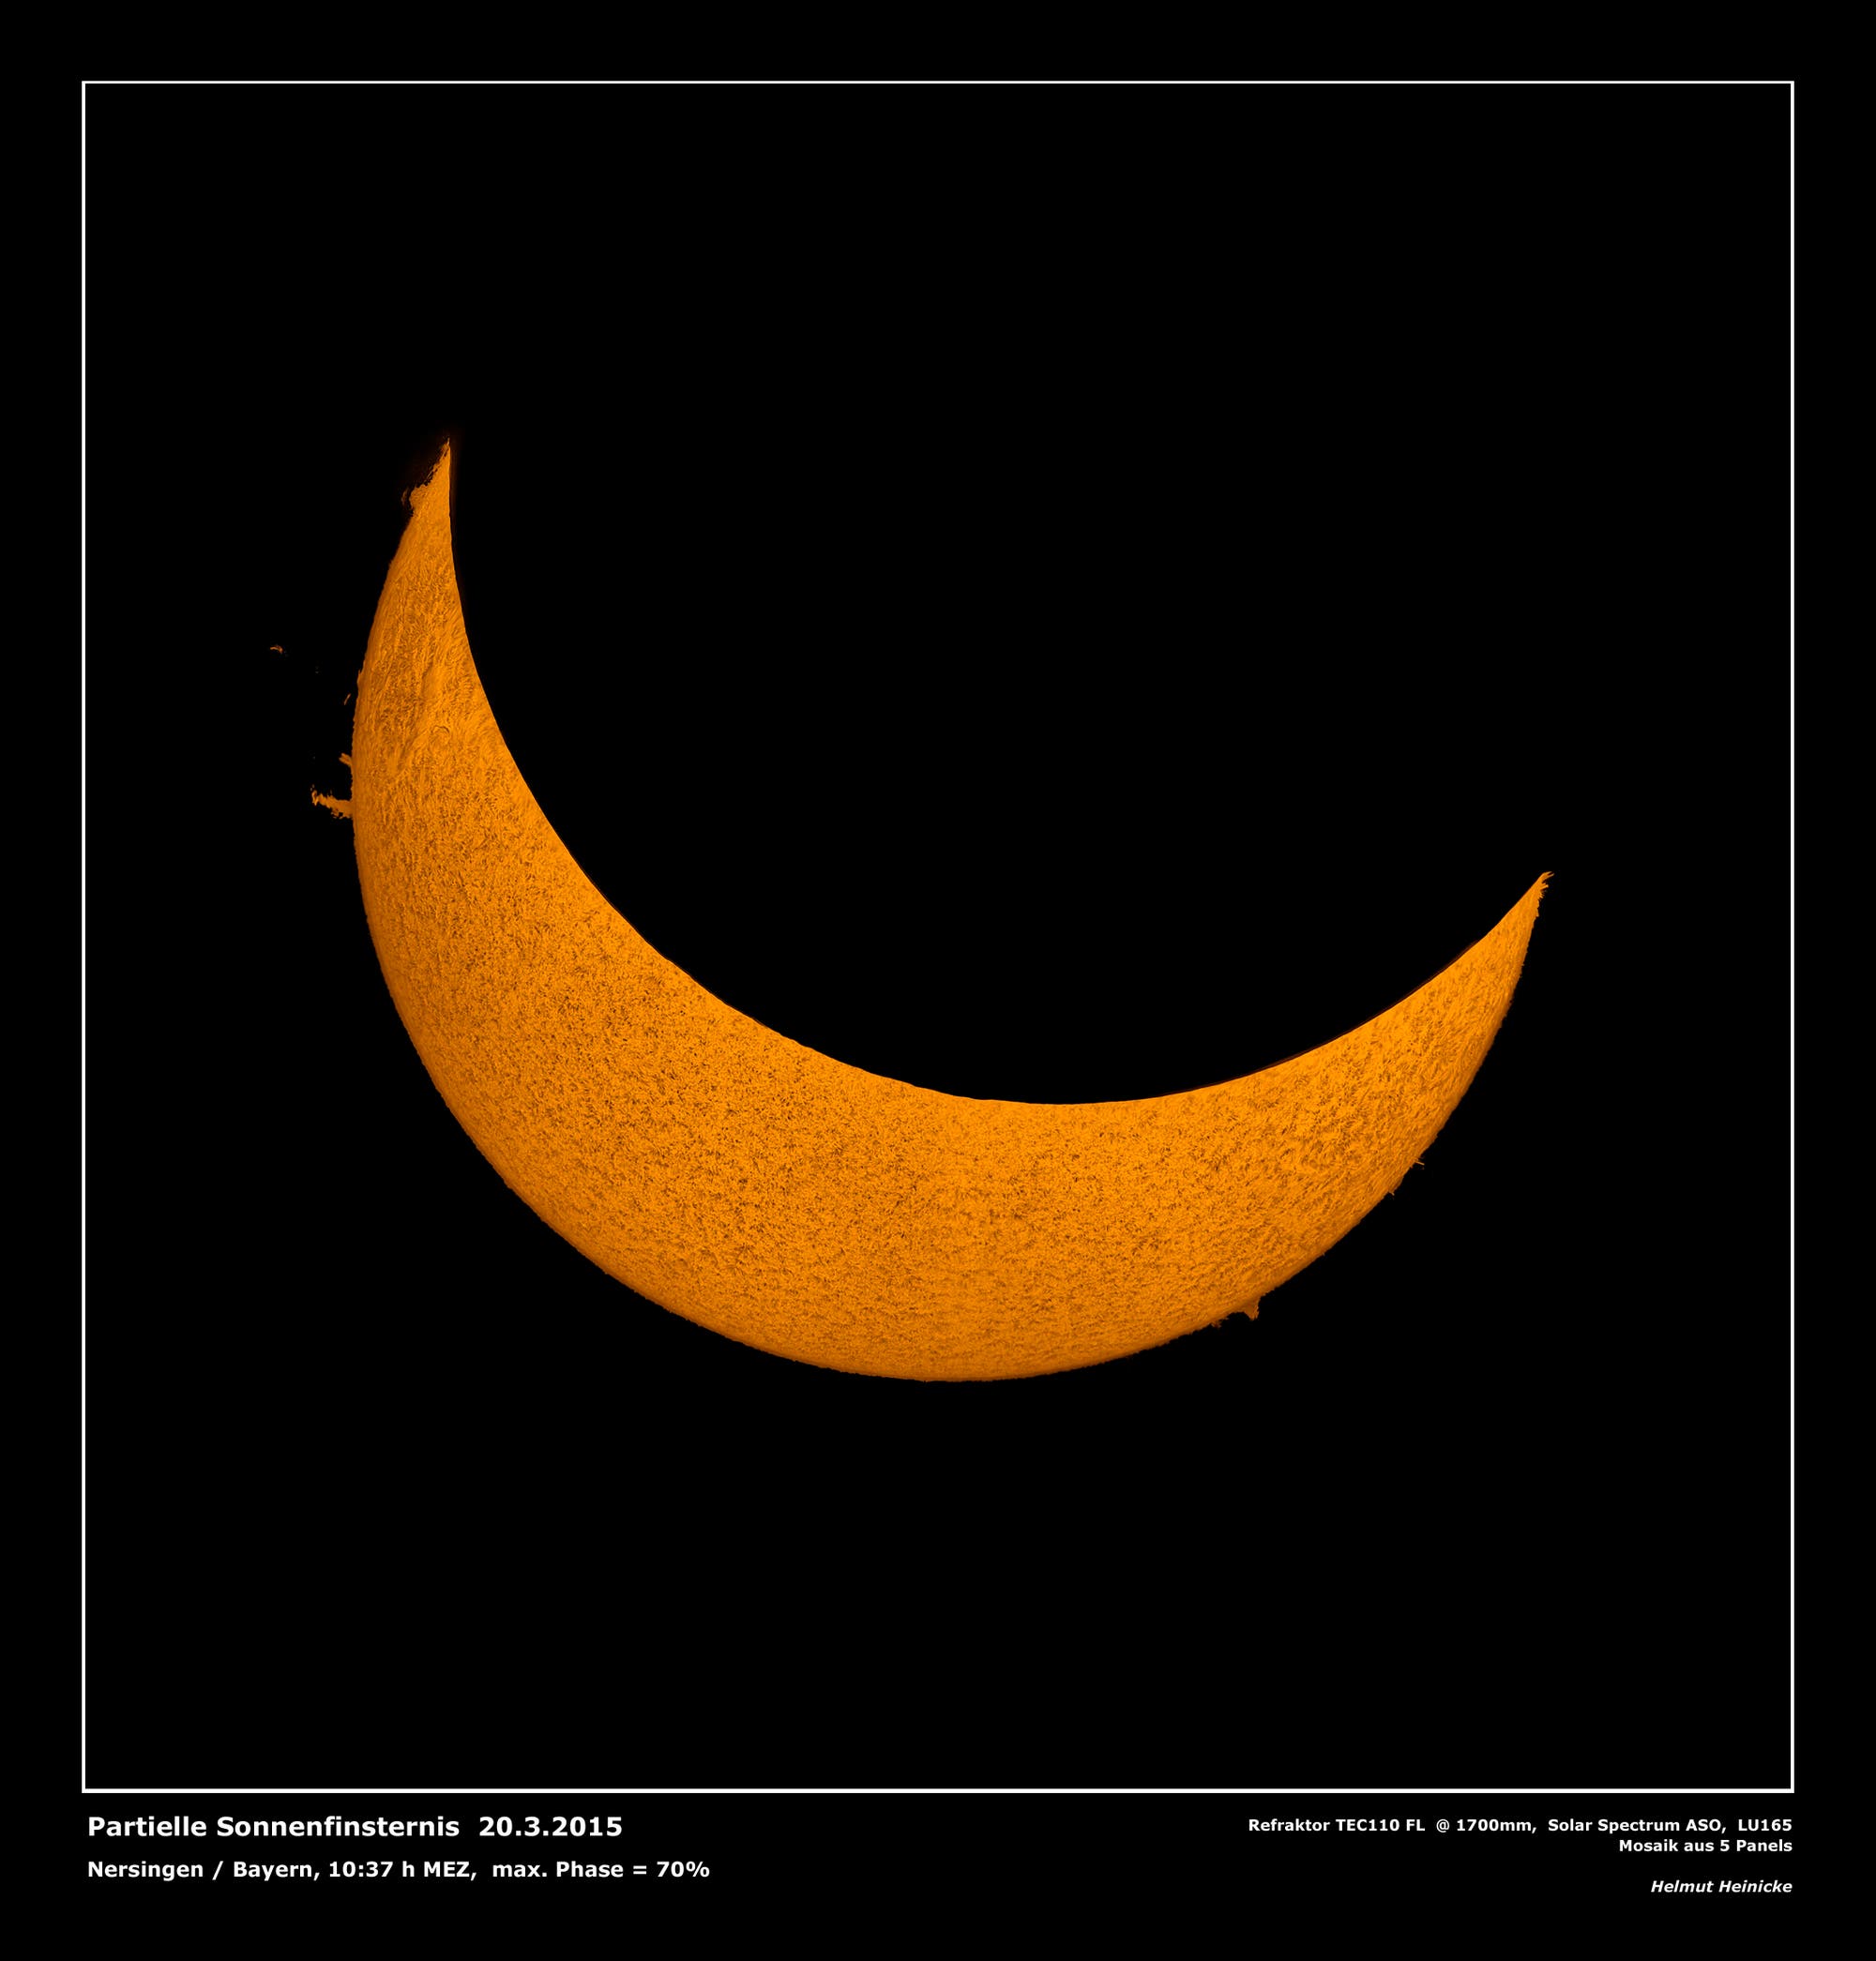 Sonnenfinsternis 20.3.2015 in H-Alpha